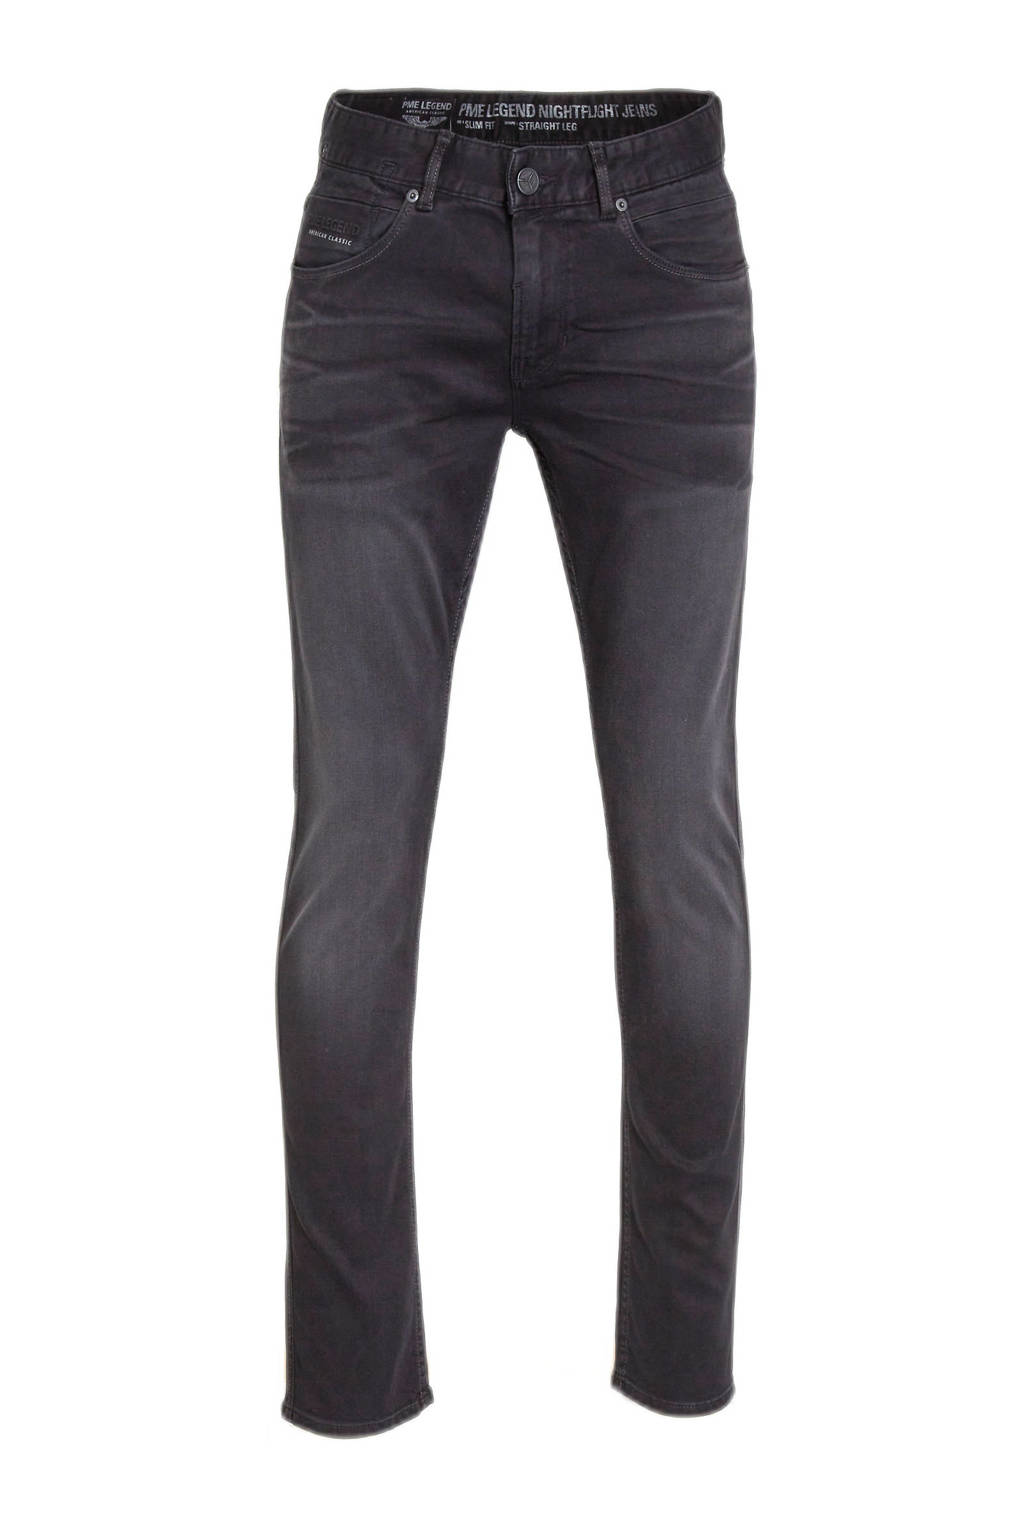 pad Verleden ontwikkeling PME Legend slim straight fit jeans Nightflight zwart | wehkamp